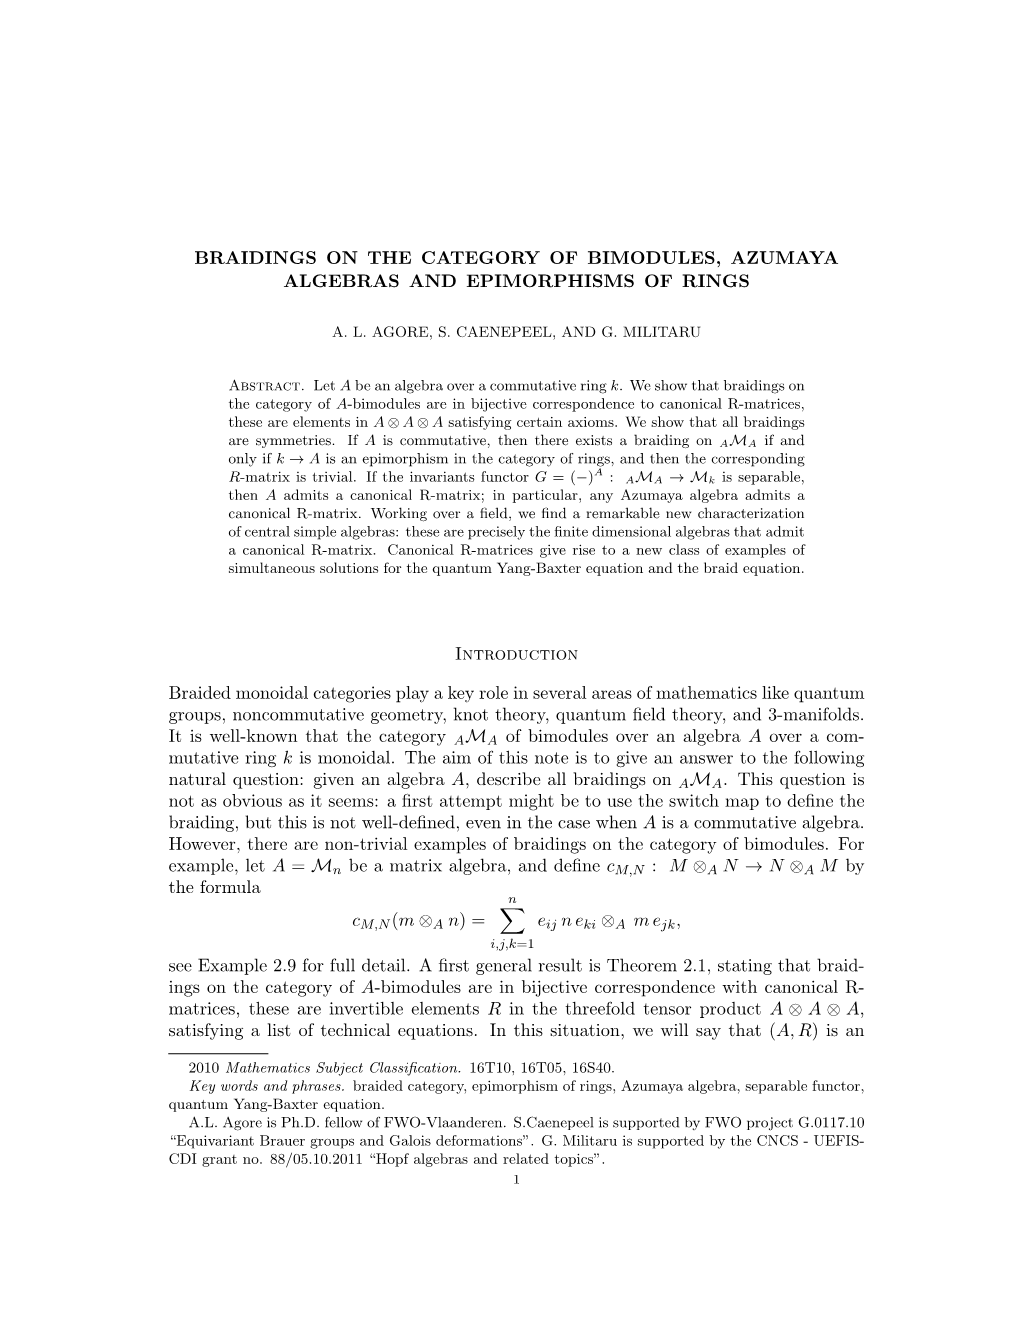 Braidings on the Category of Bimodules, Azumaya Algebras and Epimorphisms of Rings